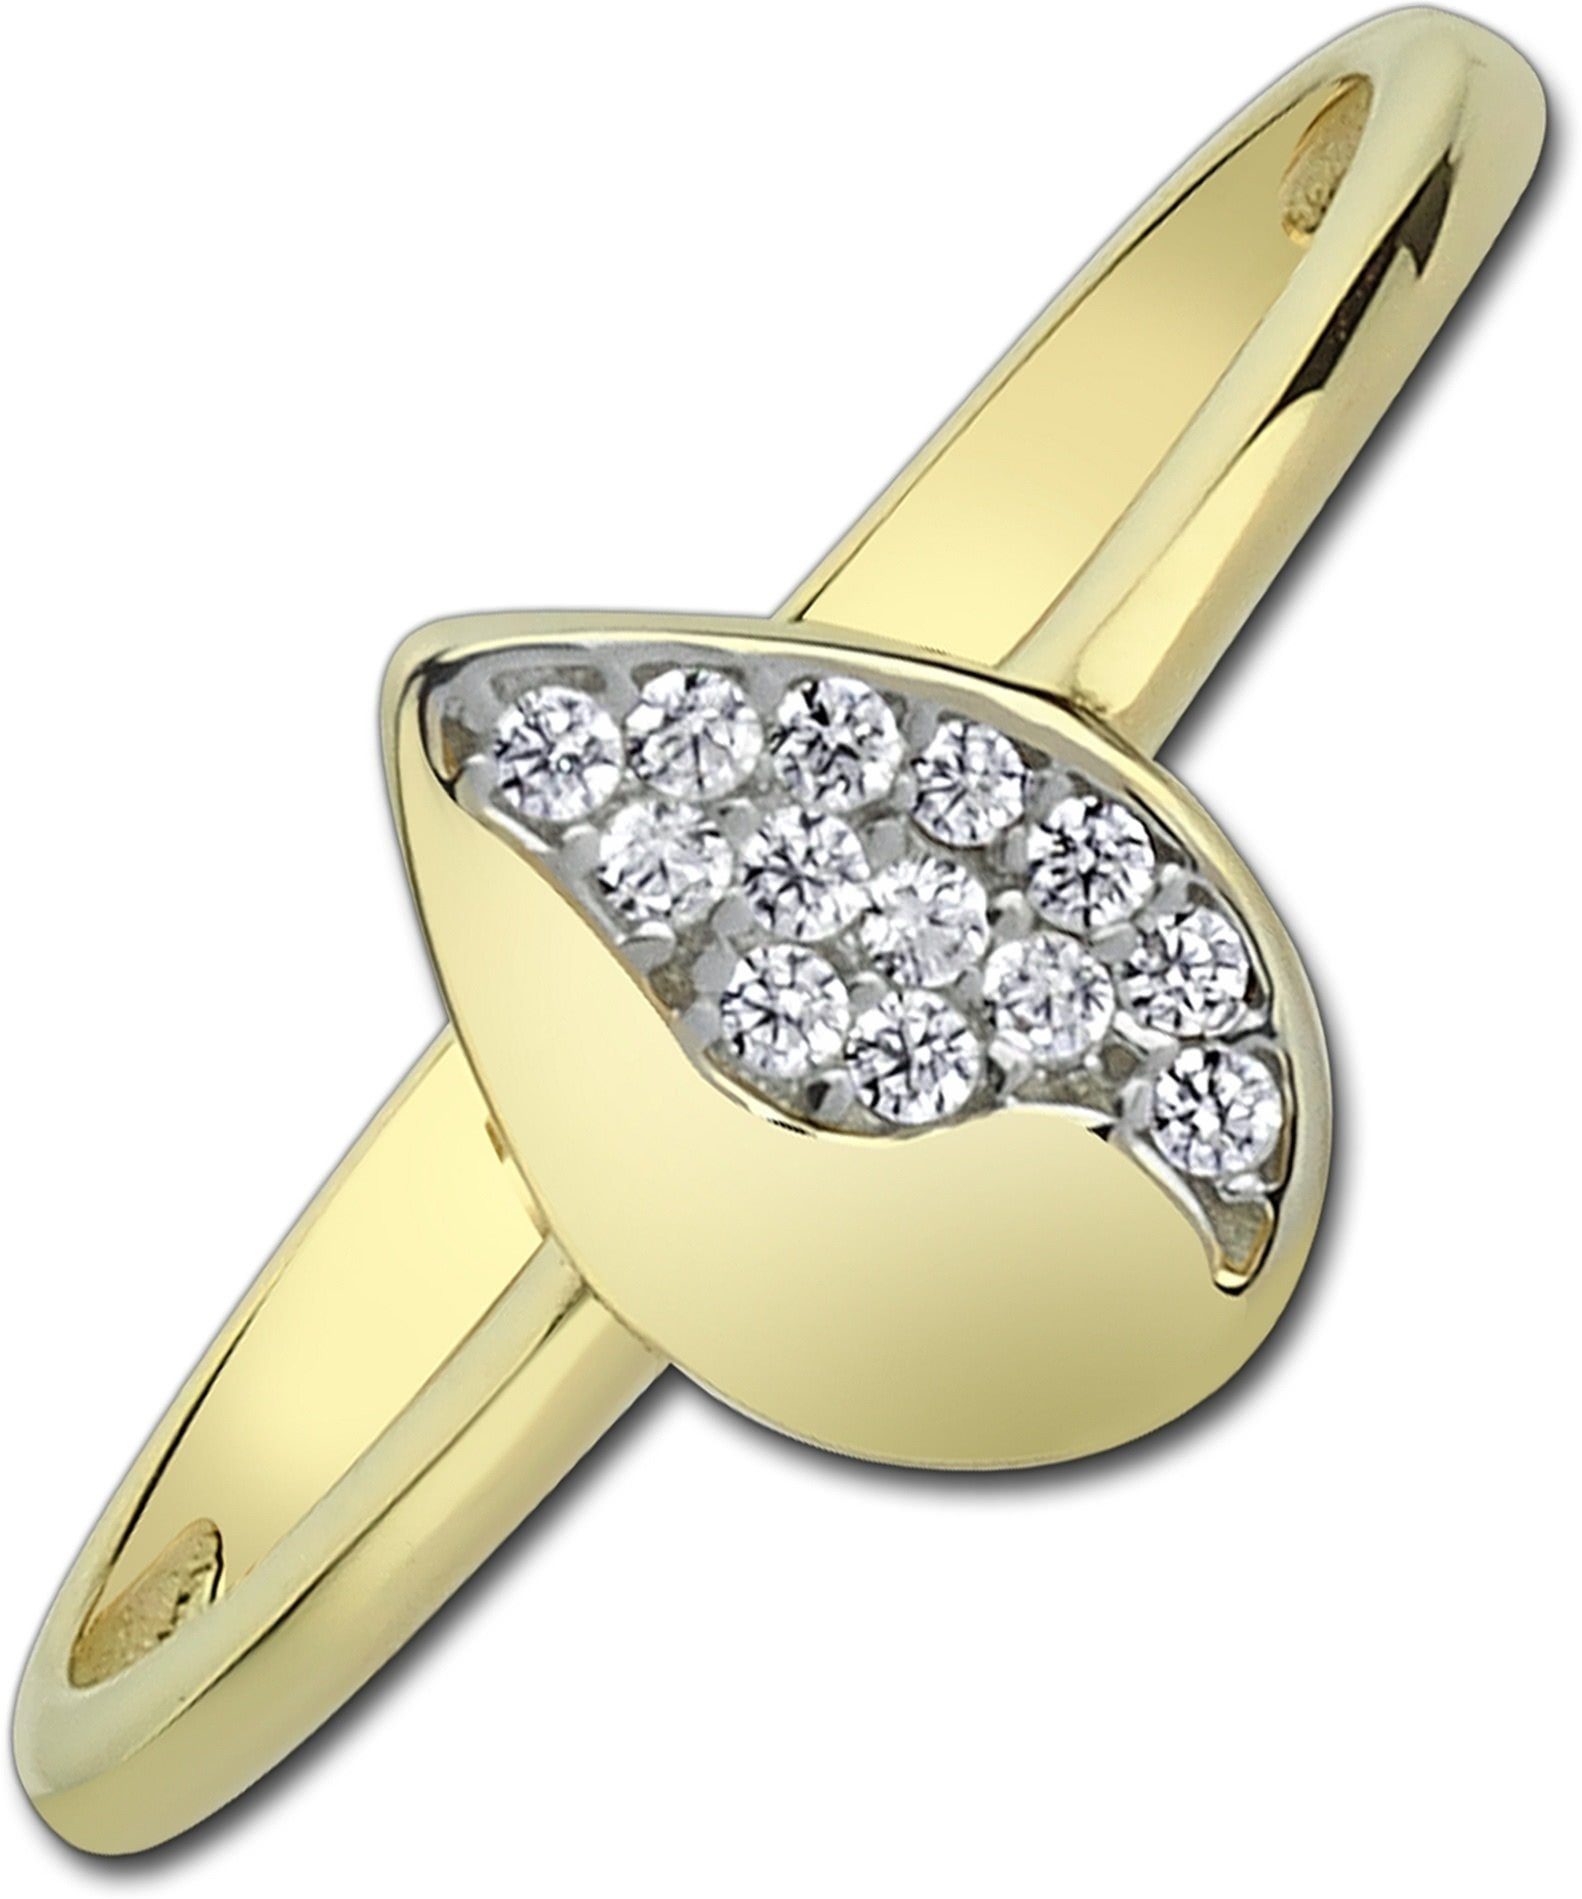 Balia Goldring Balia Damen Ring aus 333 Gelbgold (Fingerring), Fingerring Größe 54 (17,2), 333 Gelbgold - 8 Karat (Blatt gold) Gold 3